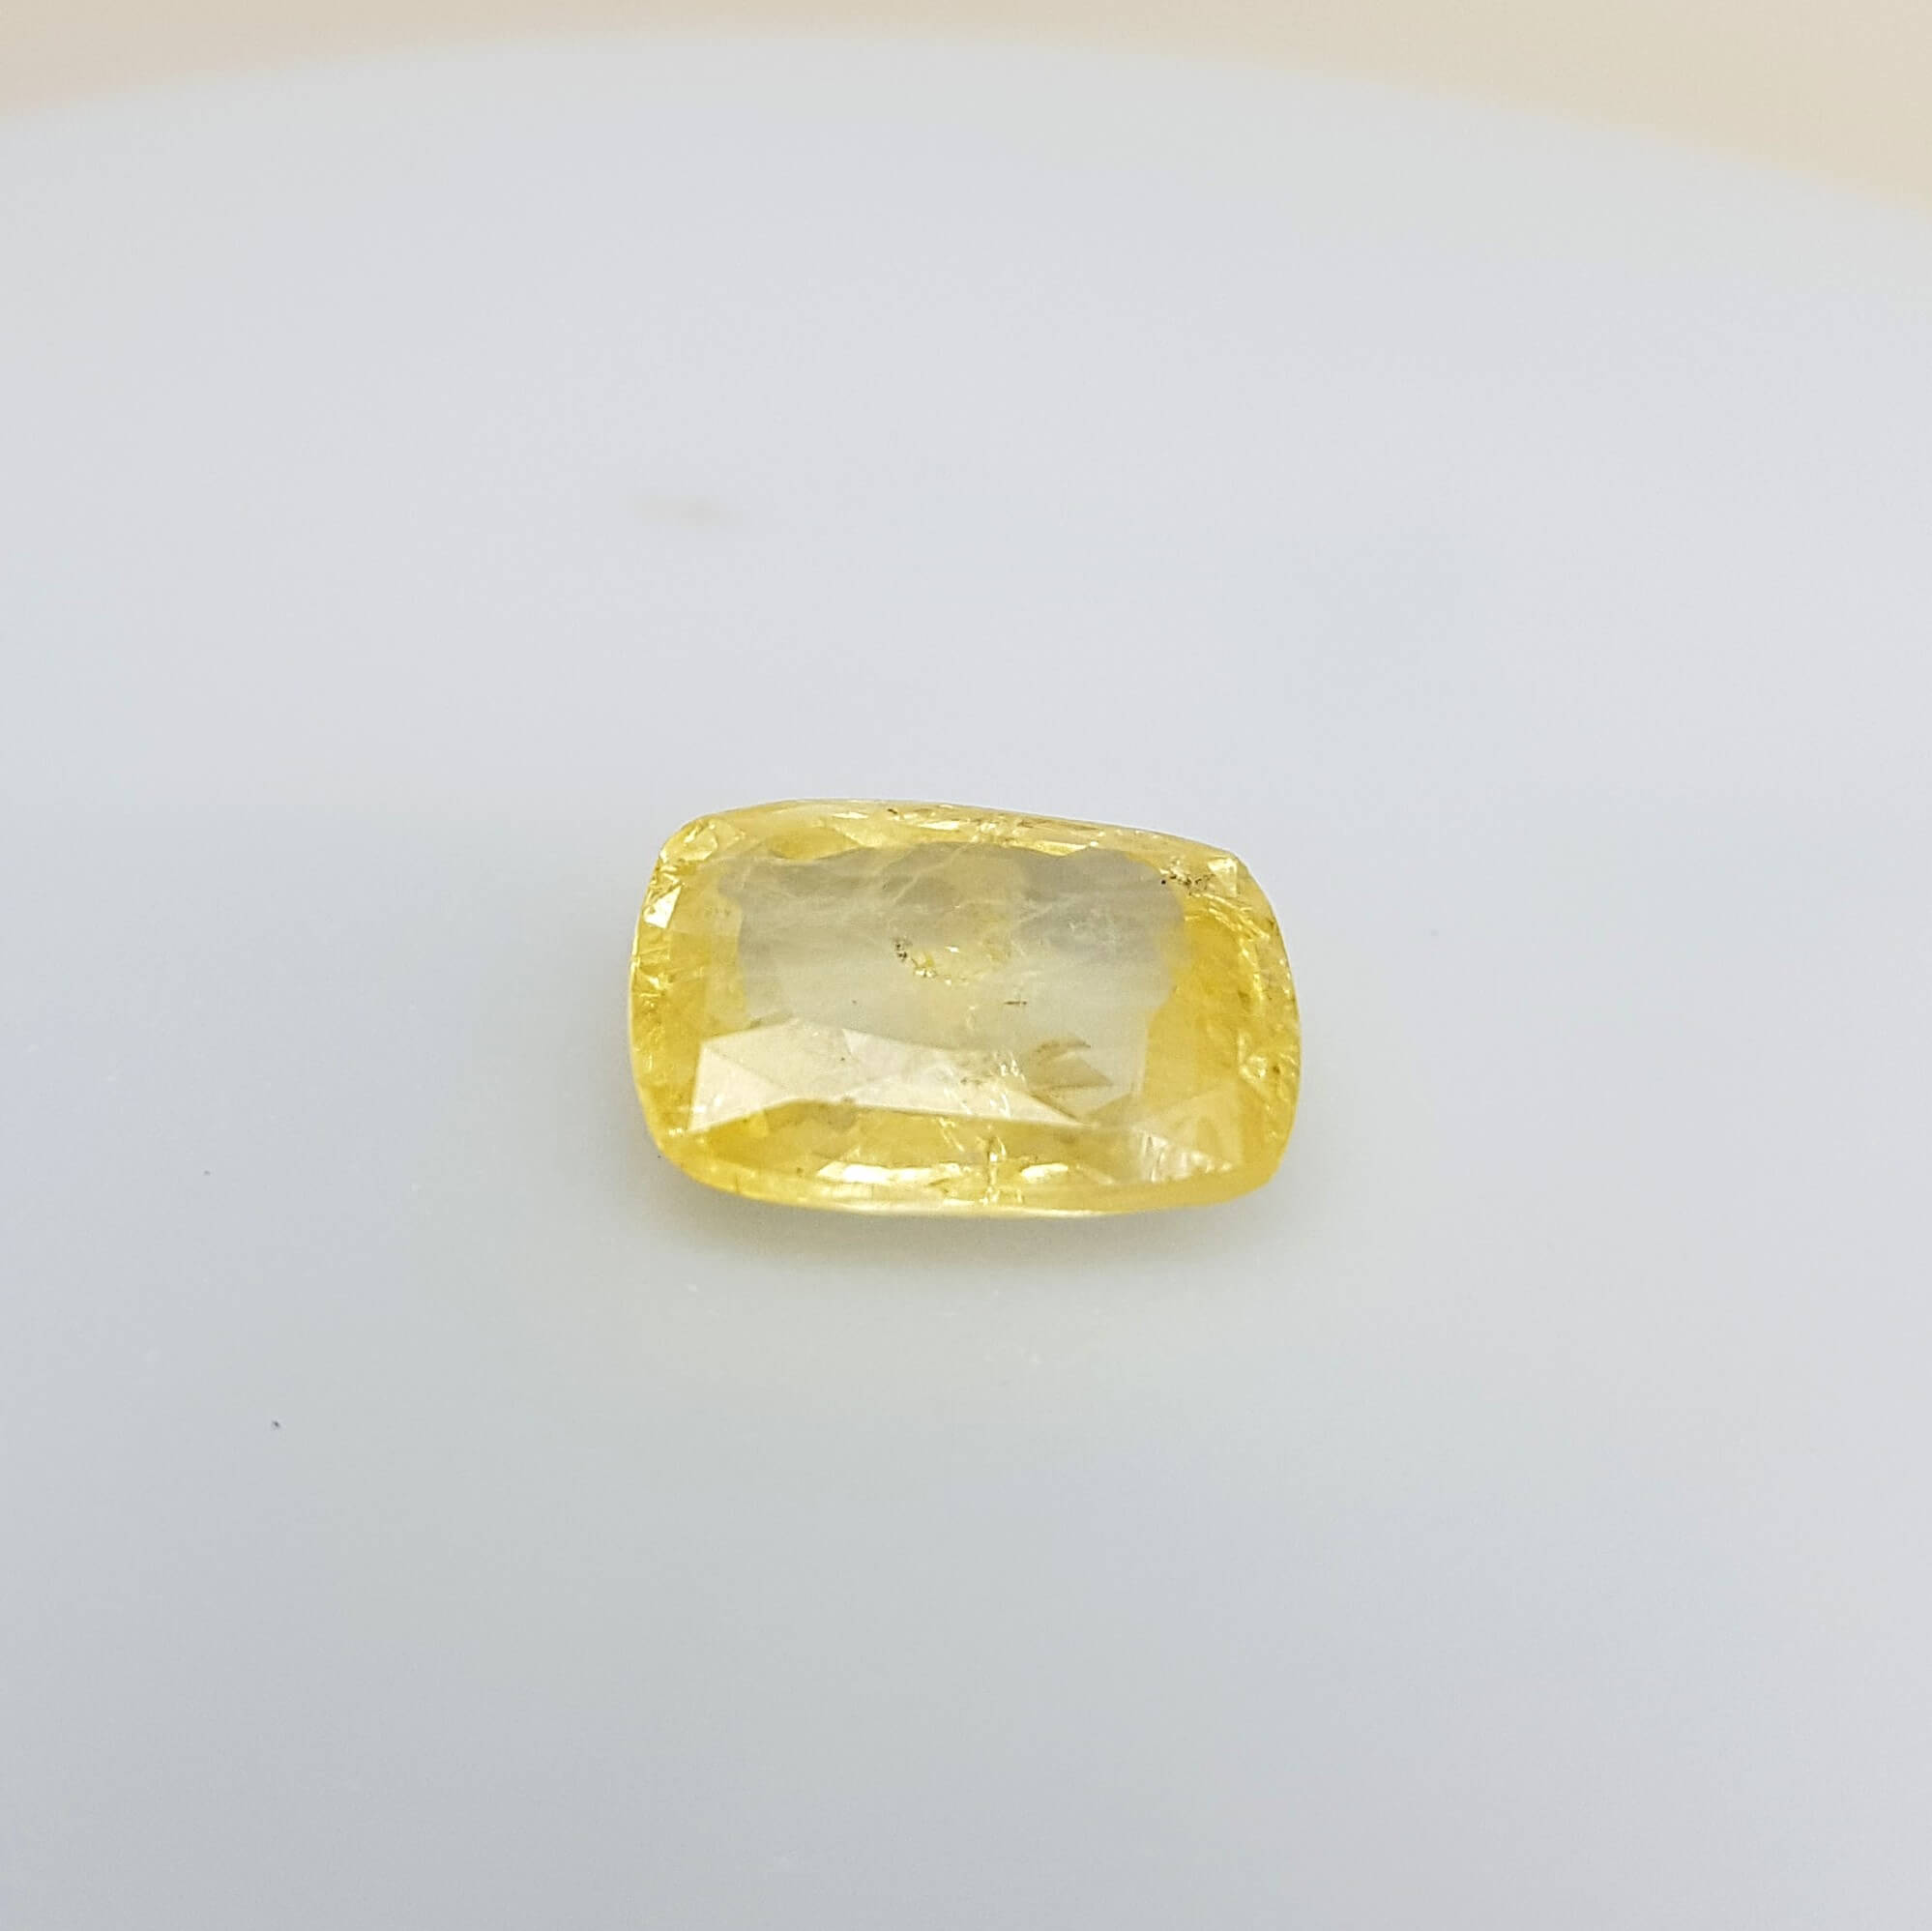 Rectangular shaped Yellow Sapphire (Pukhraj) astrological gemstone